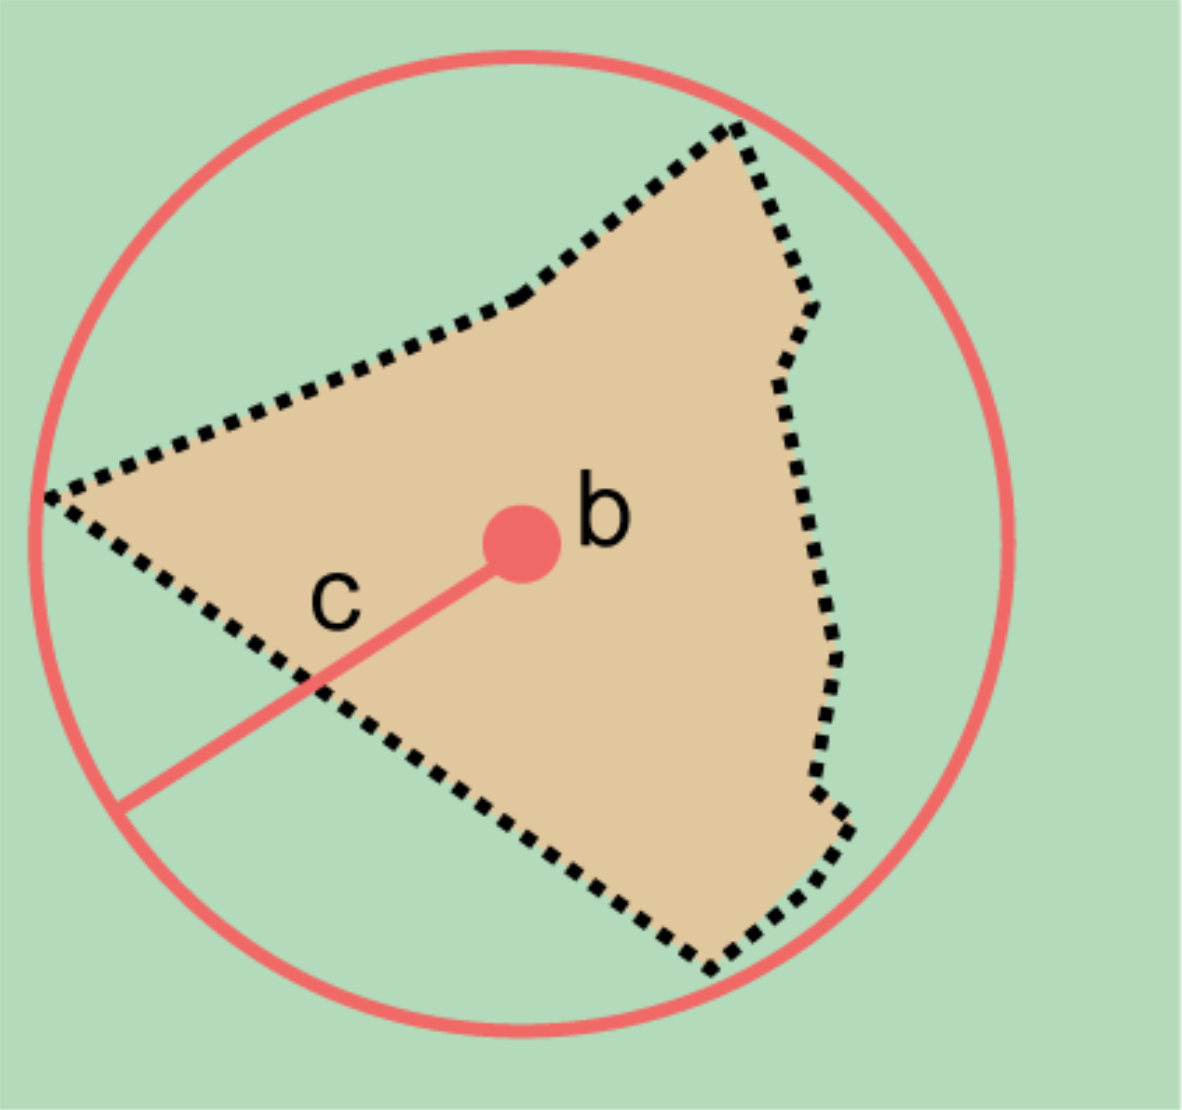 convex feature radial